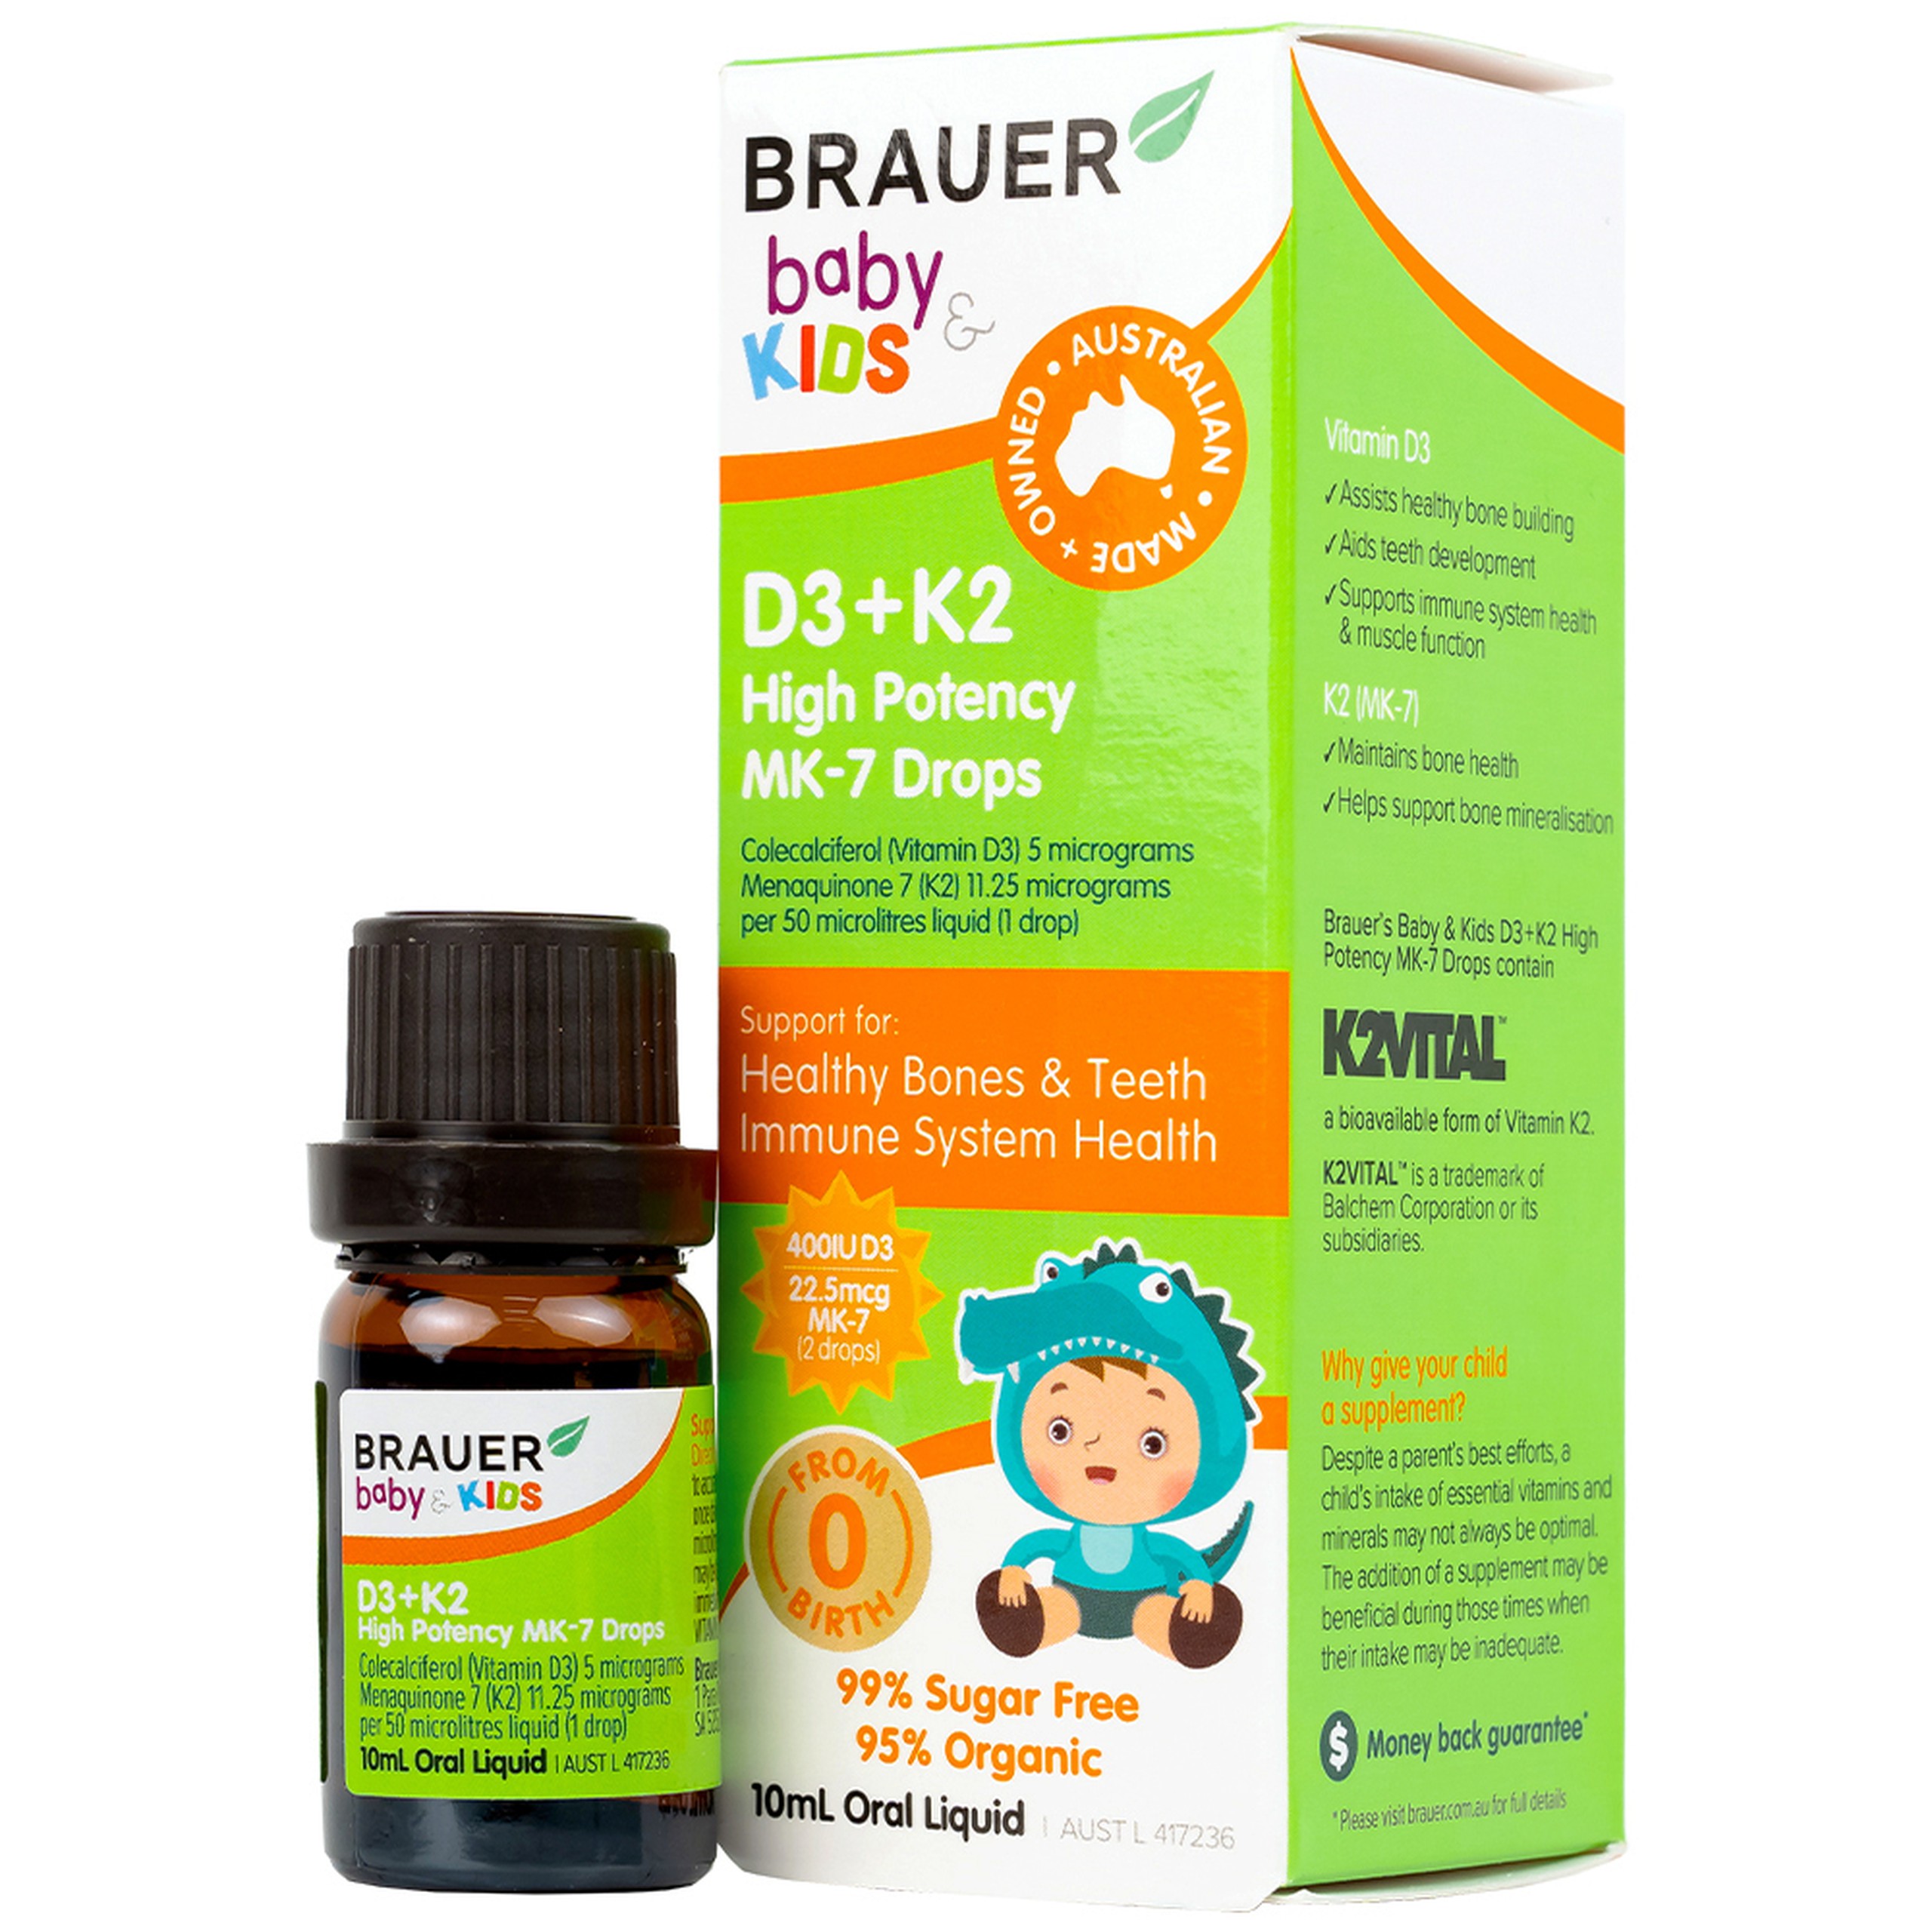 Siro Brauer Baby Kids D3+k2 High Potency MK-7 Drops 10ml bổ sung vitamin D3 và vitamin K2